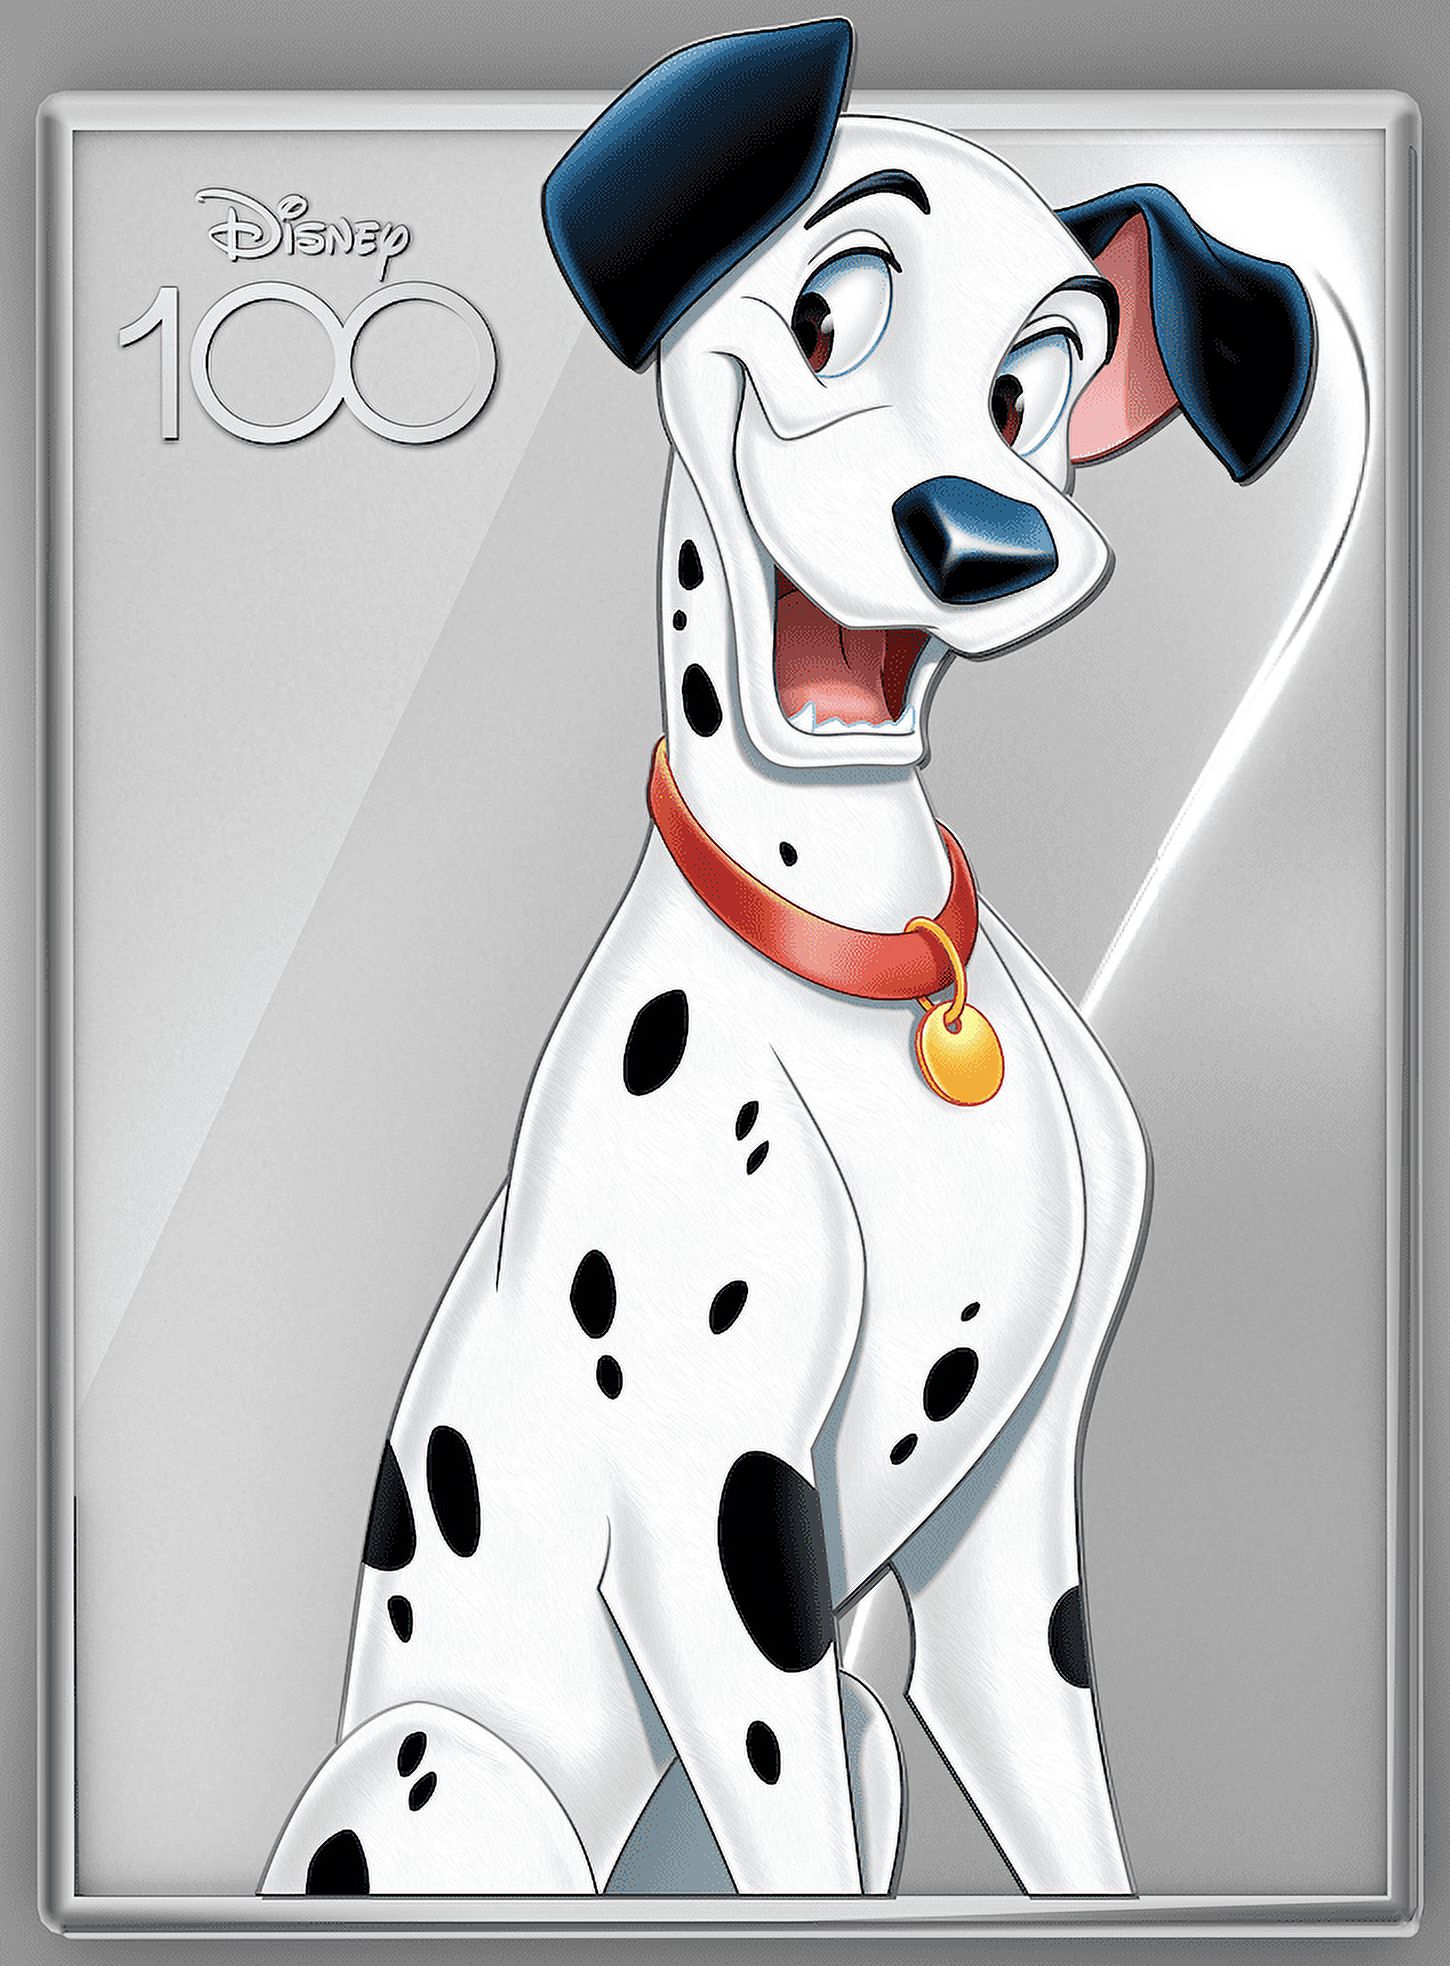 101 Dalmatians - Disney100 Edition Walmart Exclusive (Blu-ray +